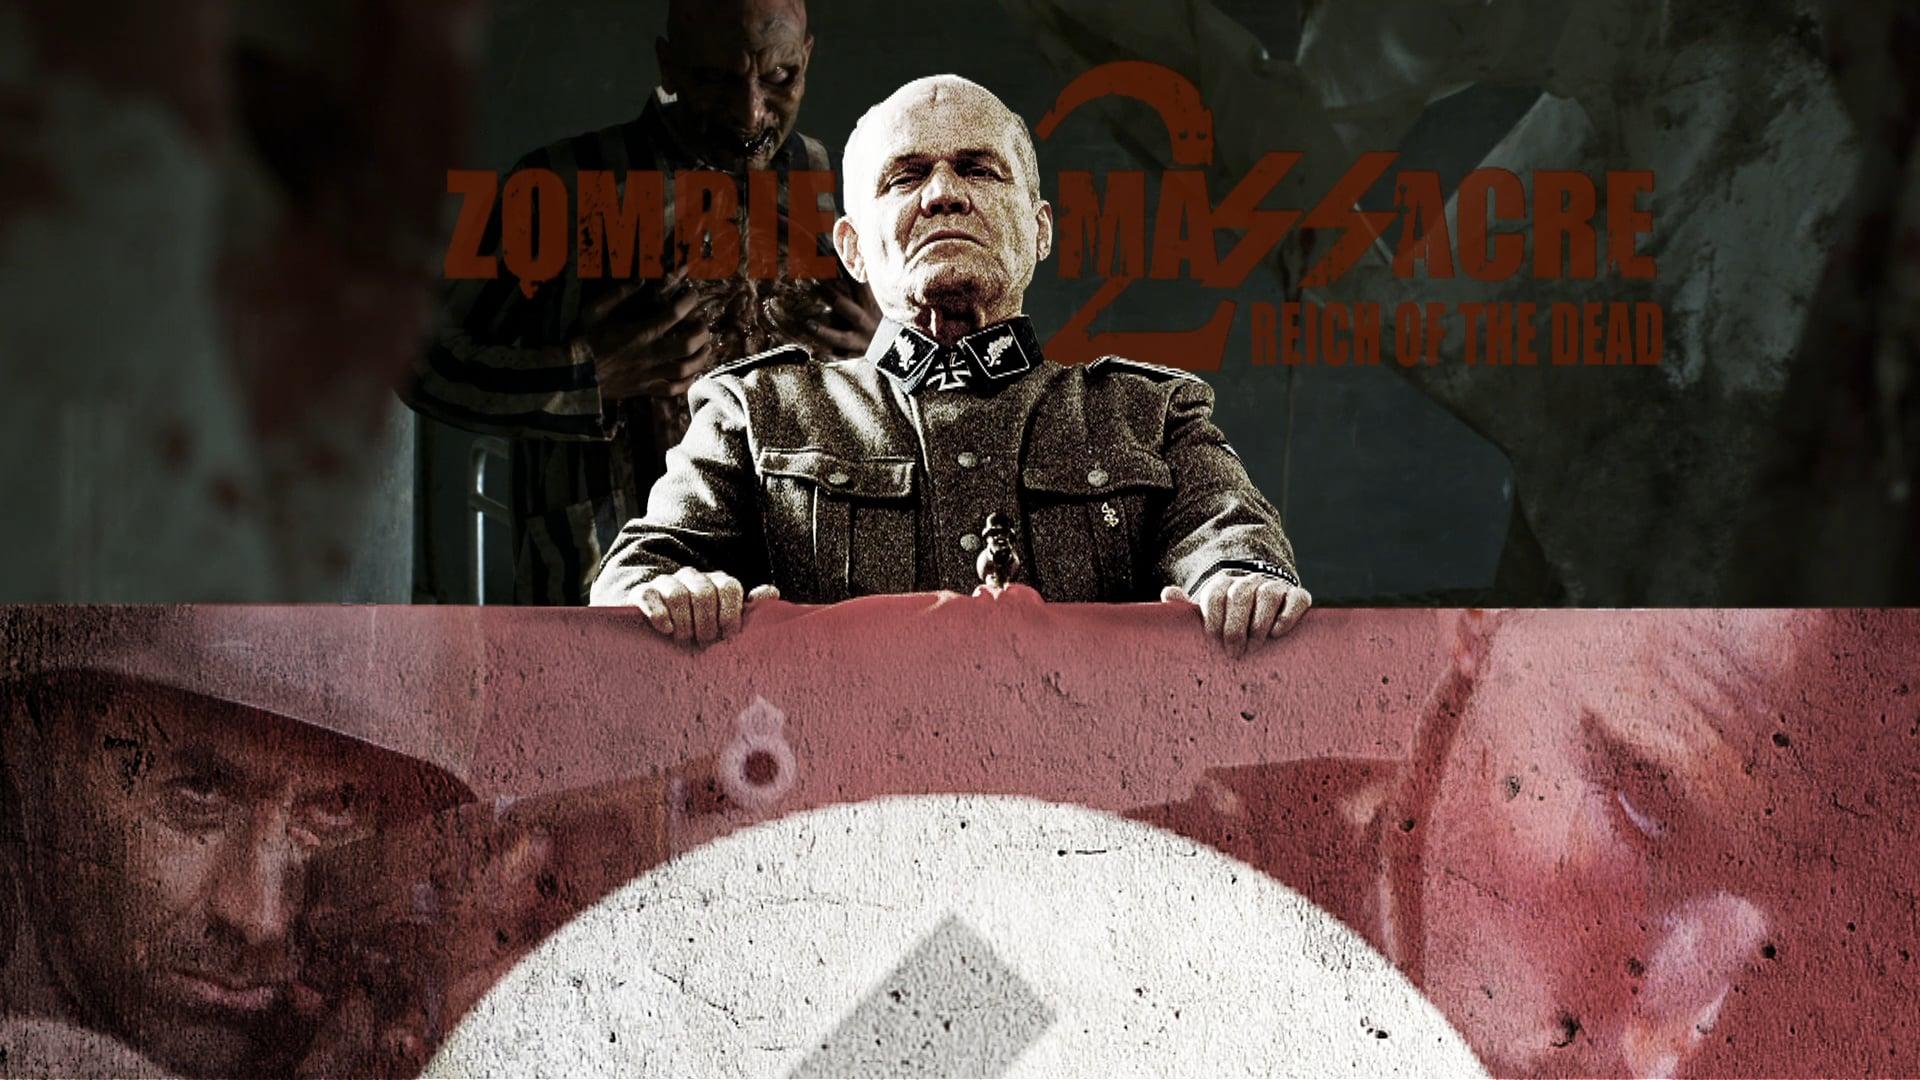 Zombie Massacre 2: Reich of the Dead backdrop